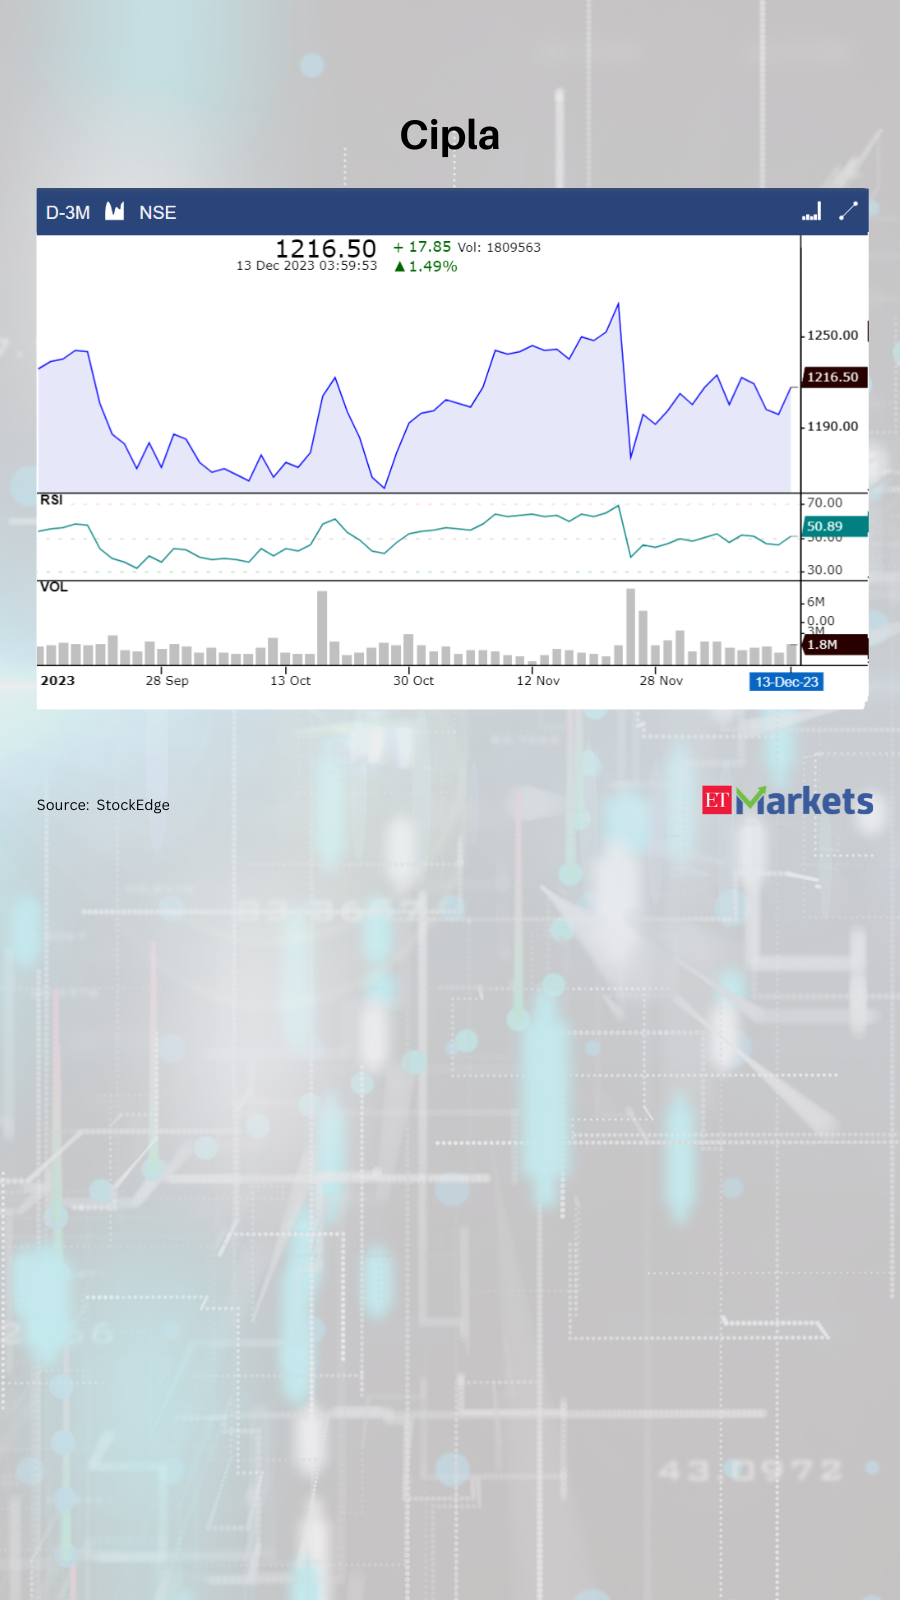 3 stocks showing RSI Trending Up on December 13 